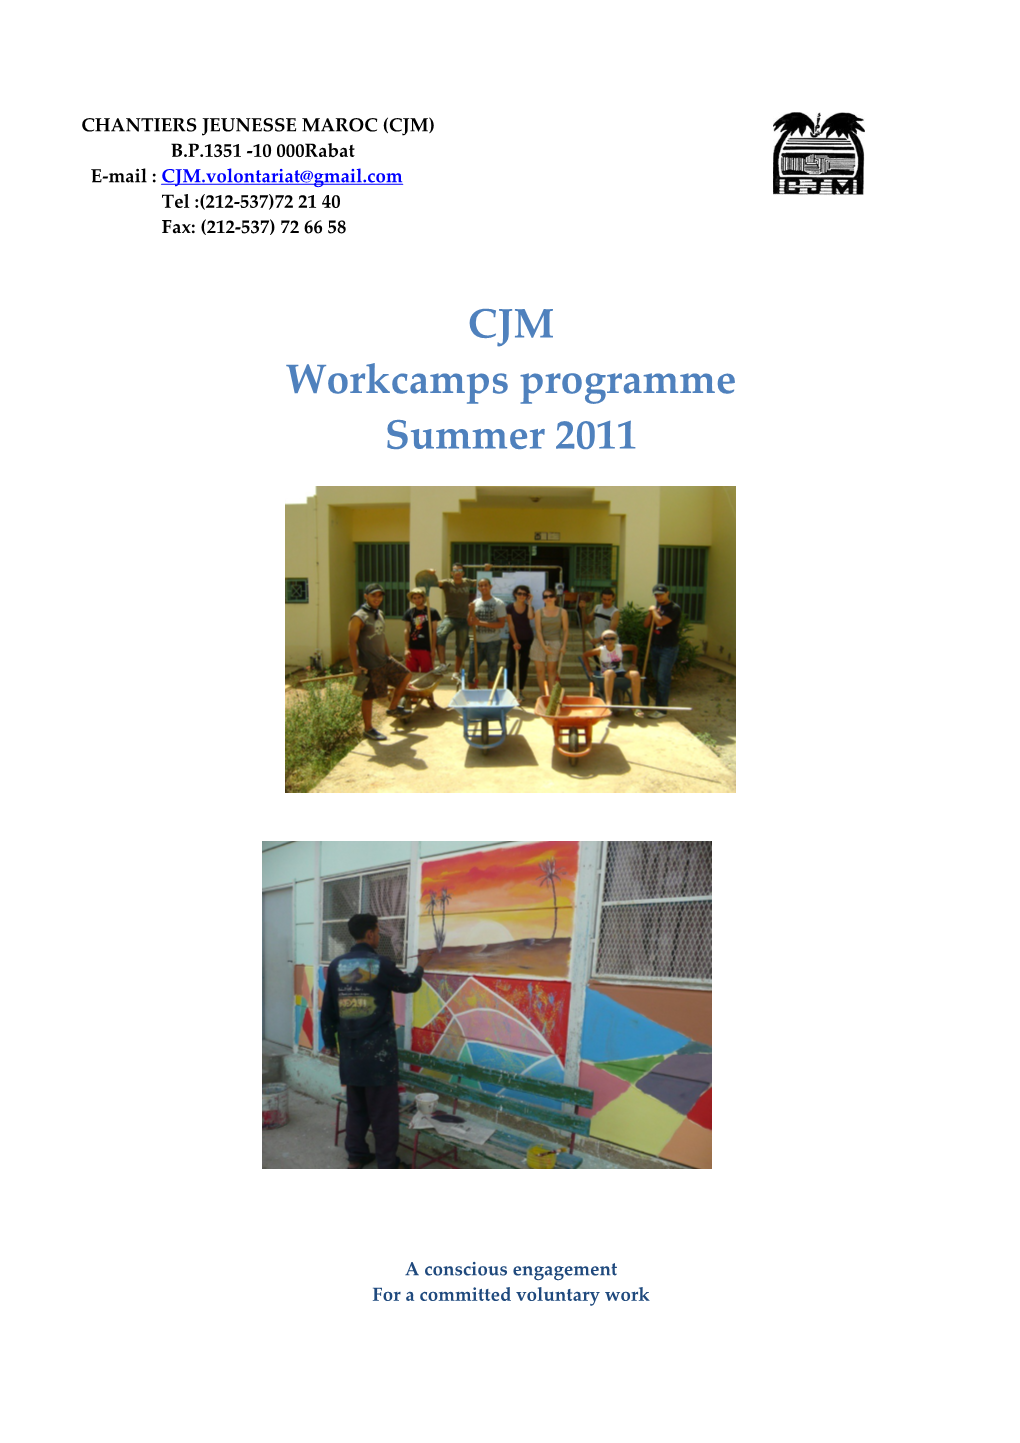 Workcamps Programme